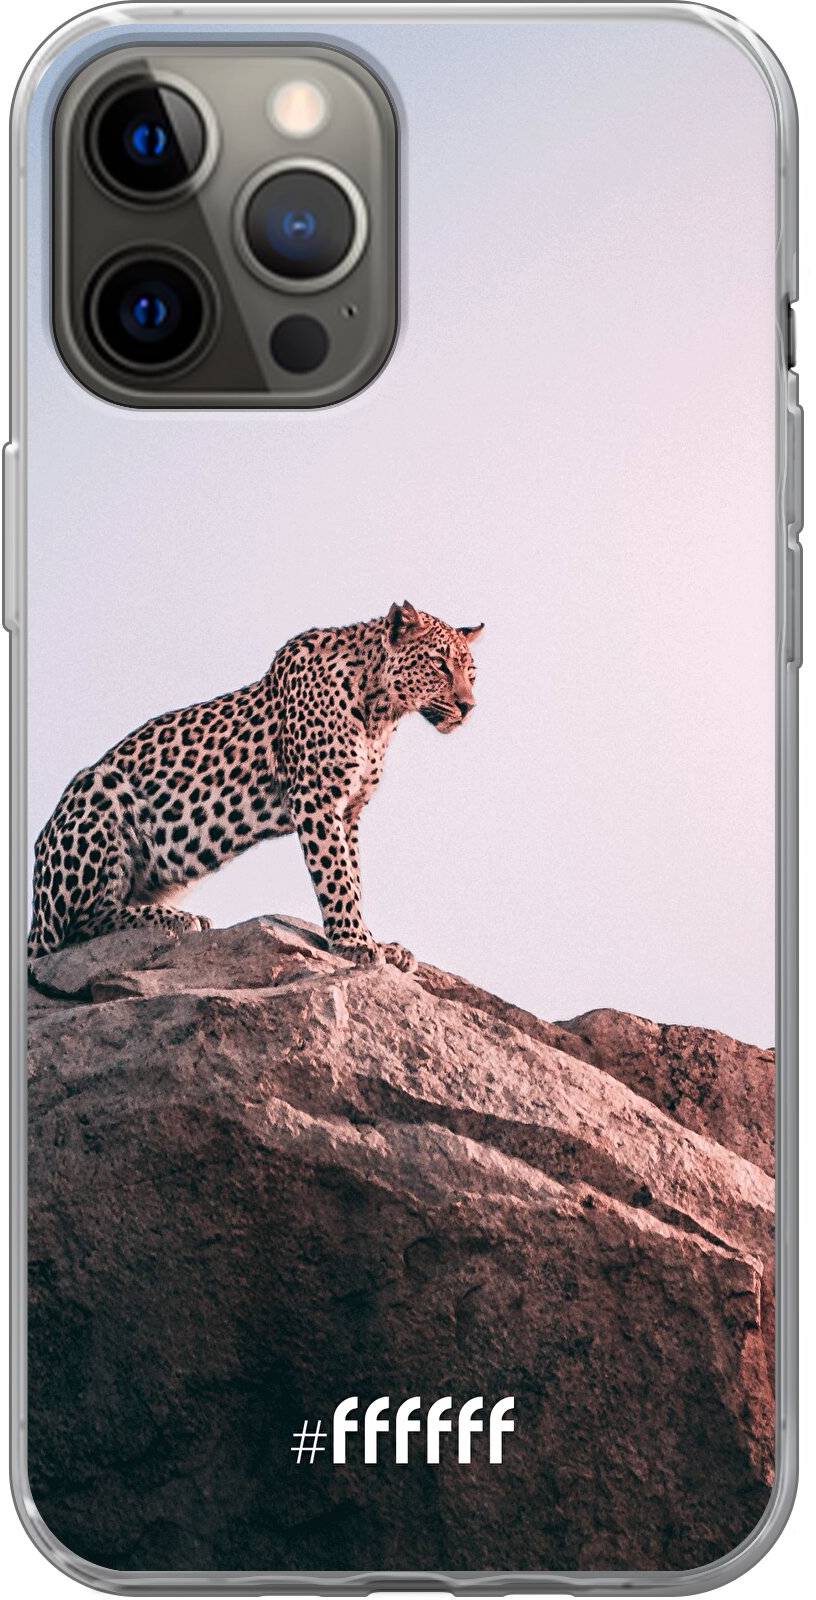 Leopard iPhone 12 Pro Max